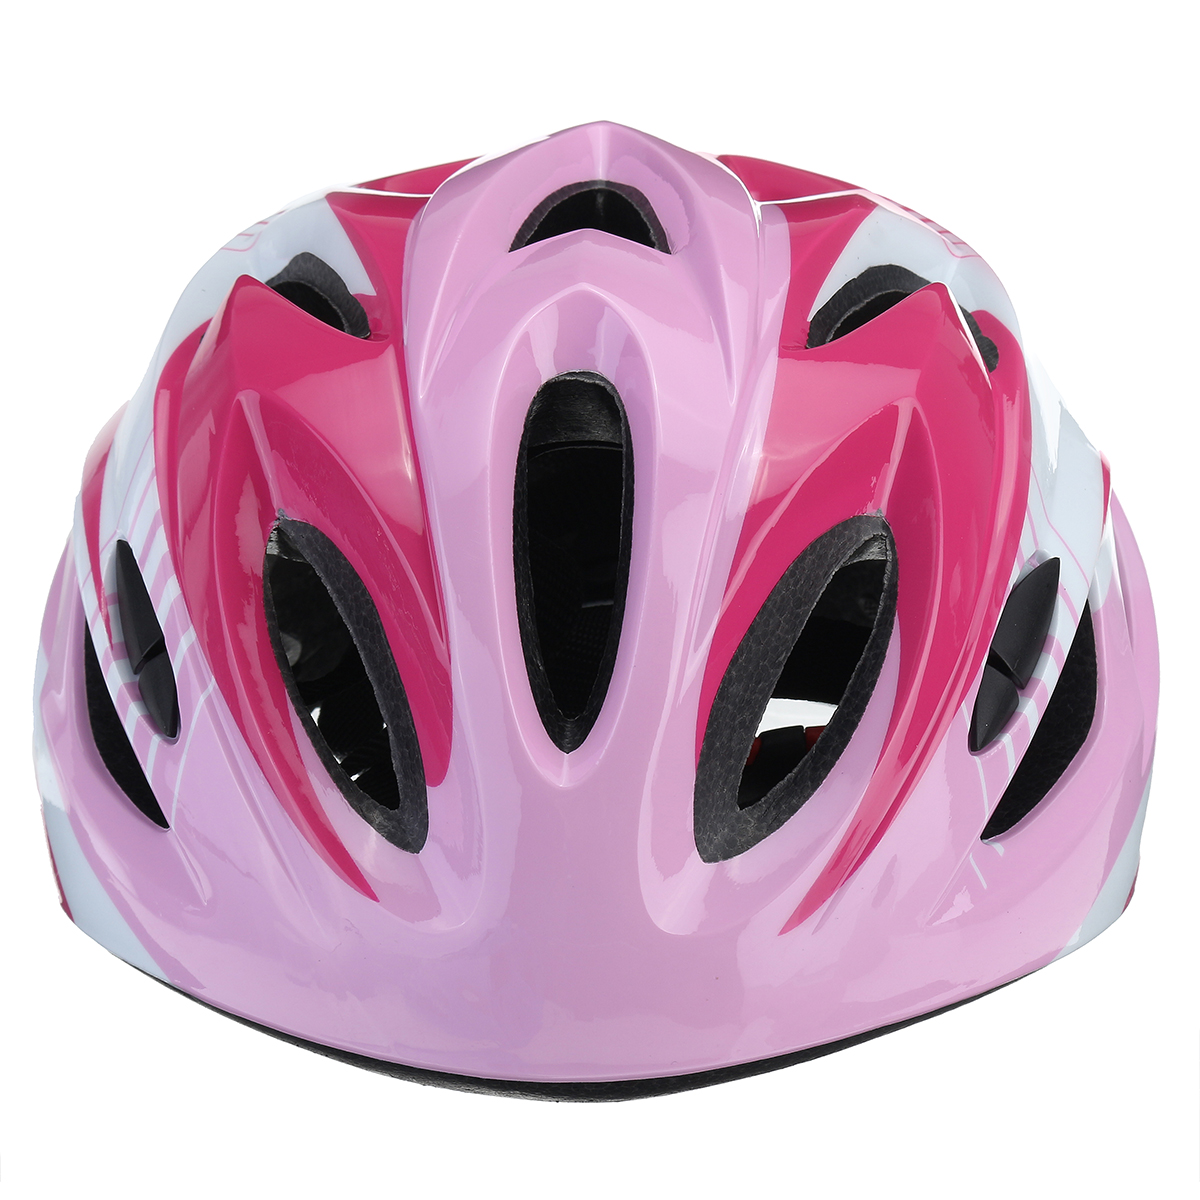 Kids-Helmet-Bicycle-Ultralight-Childrens-Protective-Gear-Girls-Cycling-Riding-Helmet-Kids-Bicycle-Sa-1796828-11